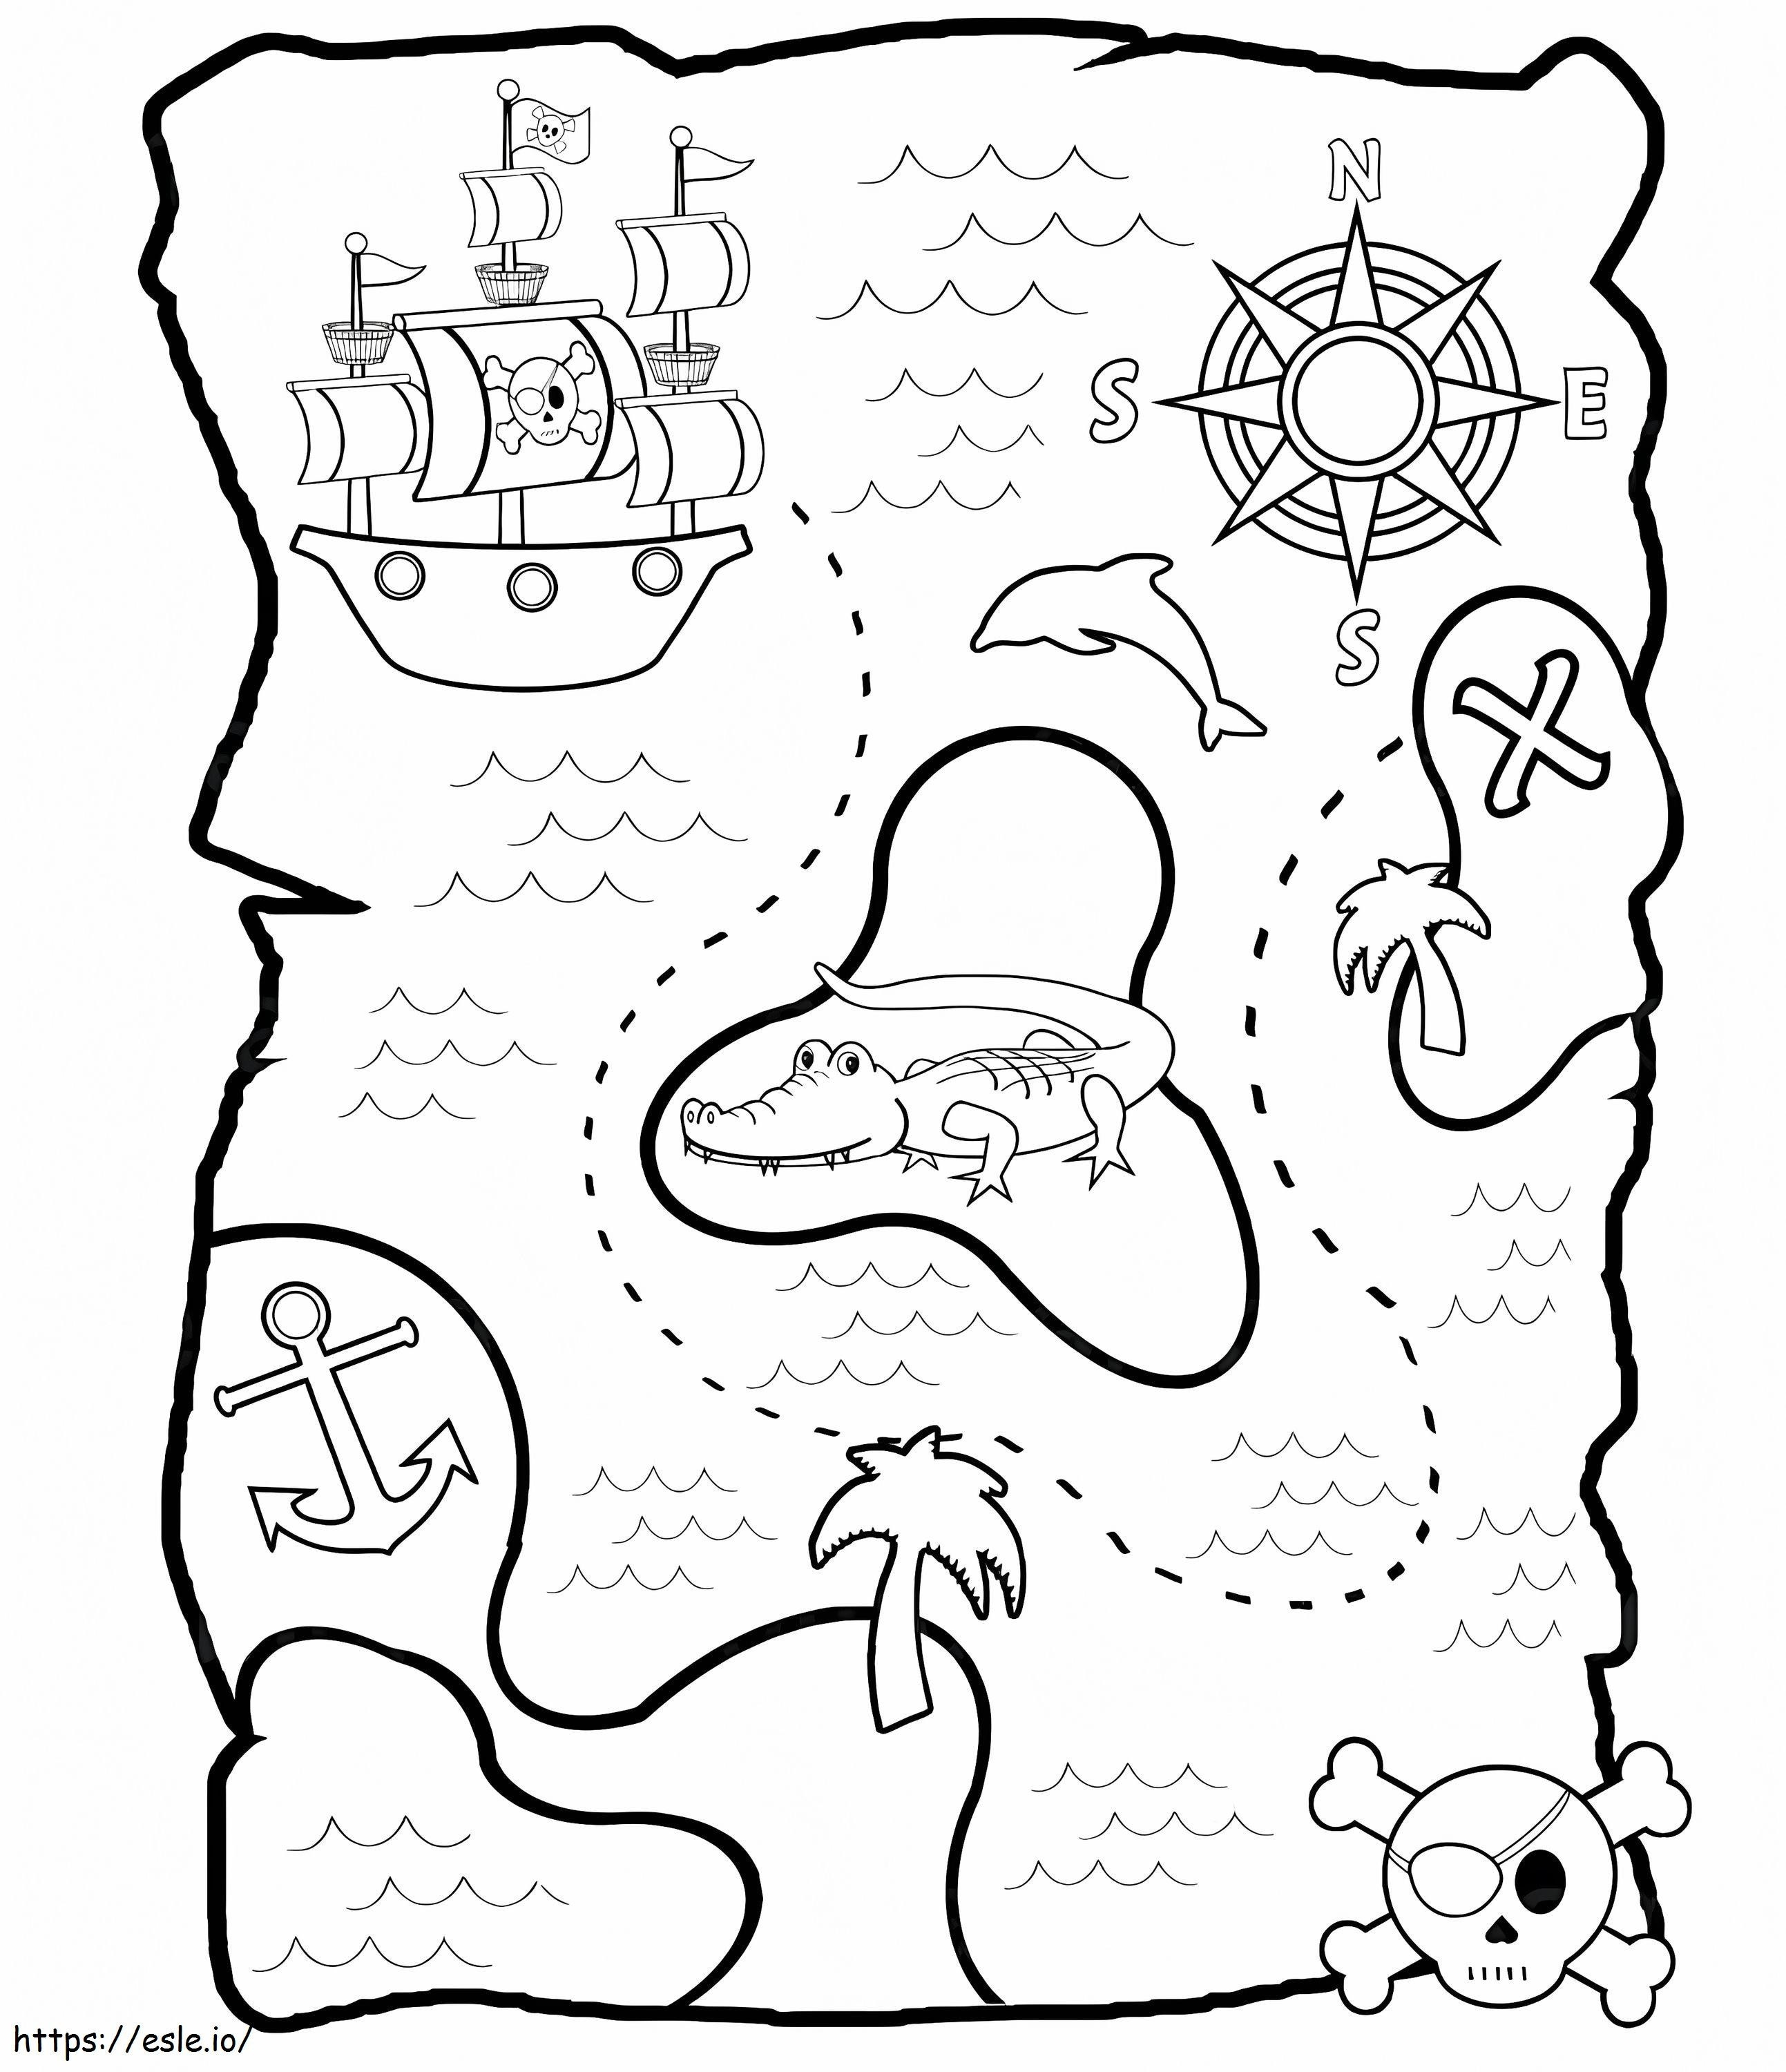 Treasure Map Free Printable coloring page